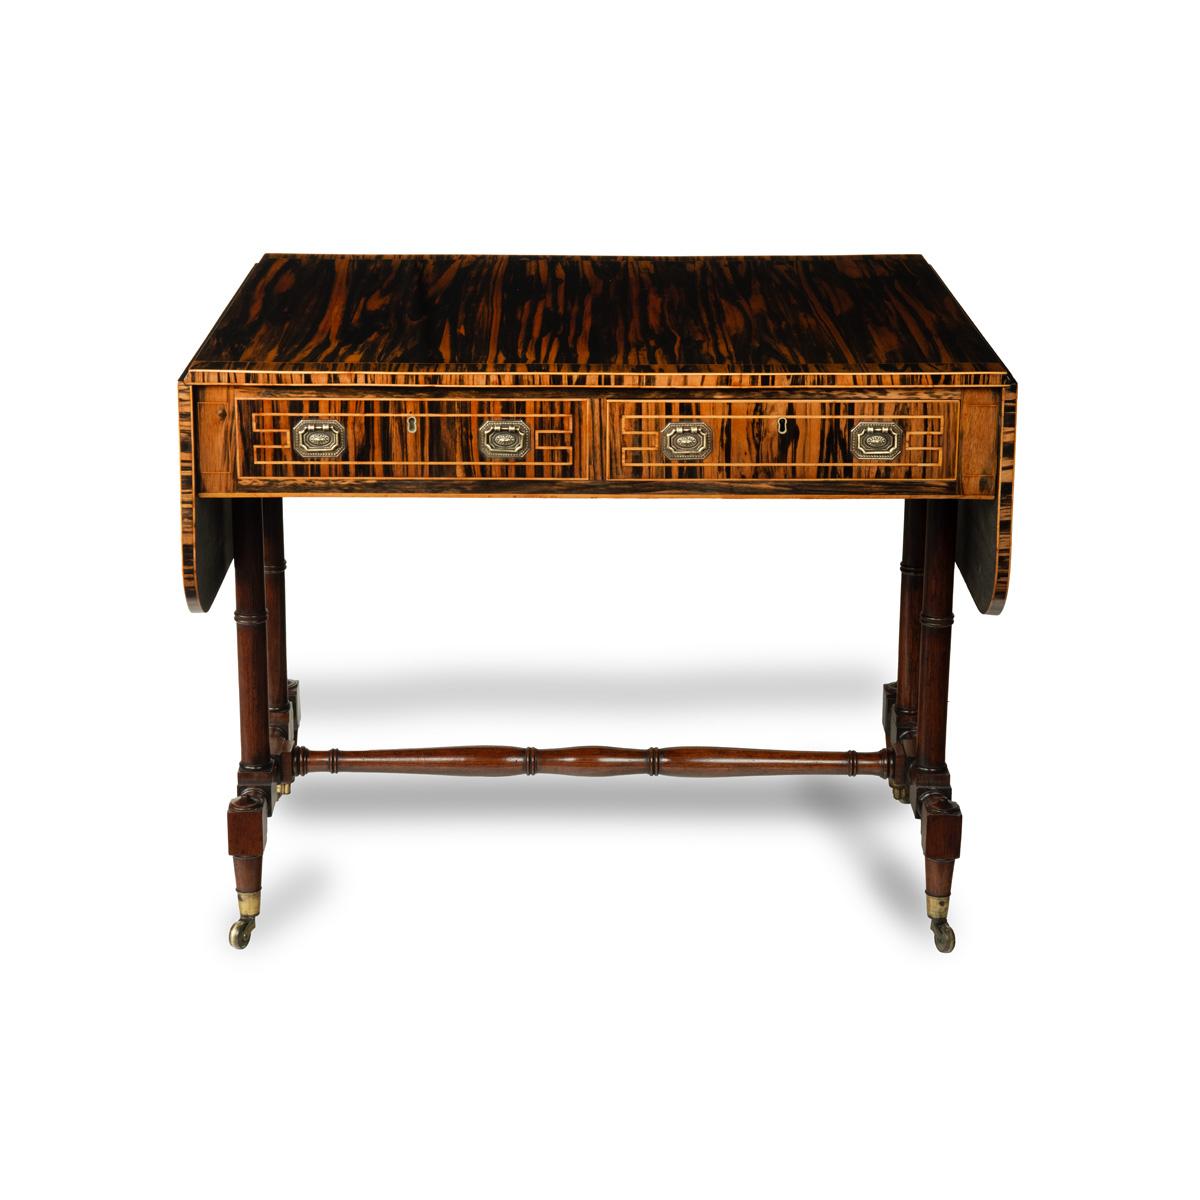 A striking Regency coromandel sofa table